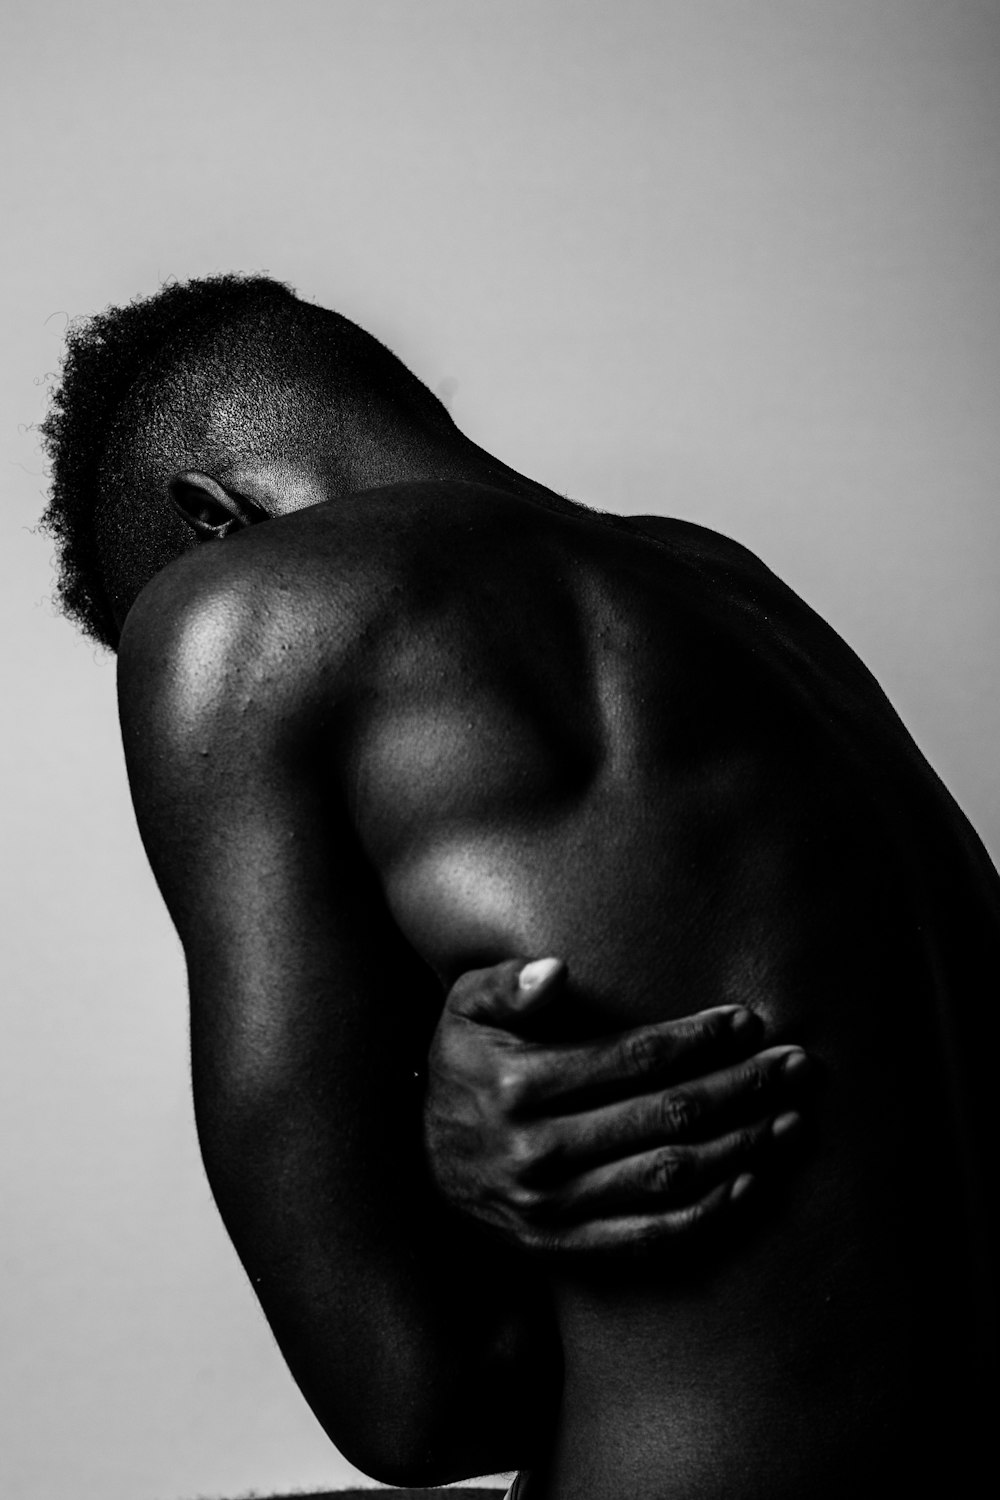 Black Gay Man Pictures | Download Free Images on Unsplash